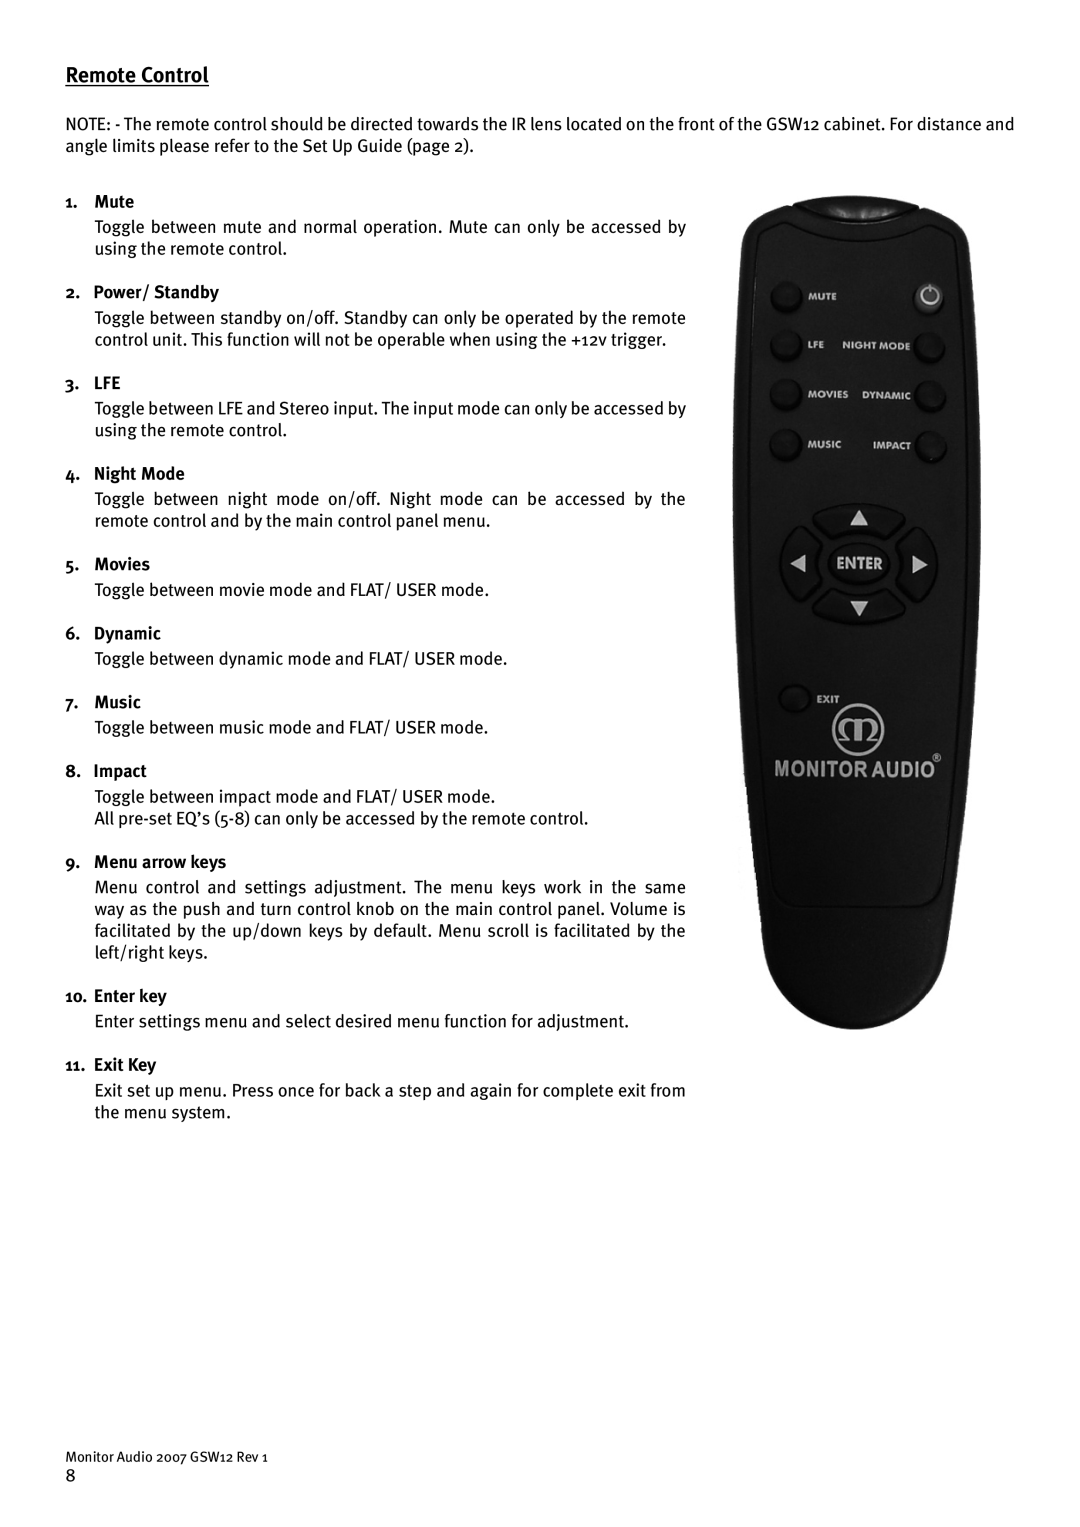 Monitor Audio GSW12 Remote Control, Mute, Power/ Standby, 3.LFE, Night Mode, Movies, Dynamic, Music, Impact, Enter key 